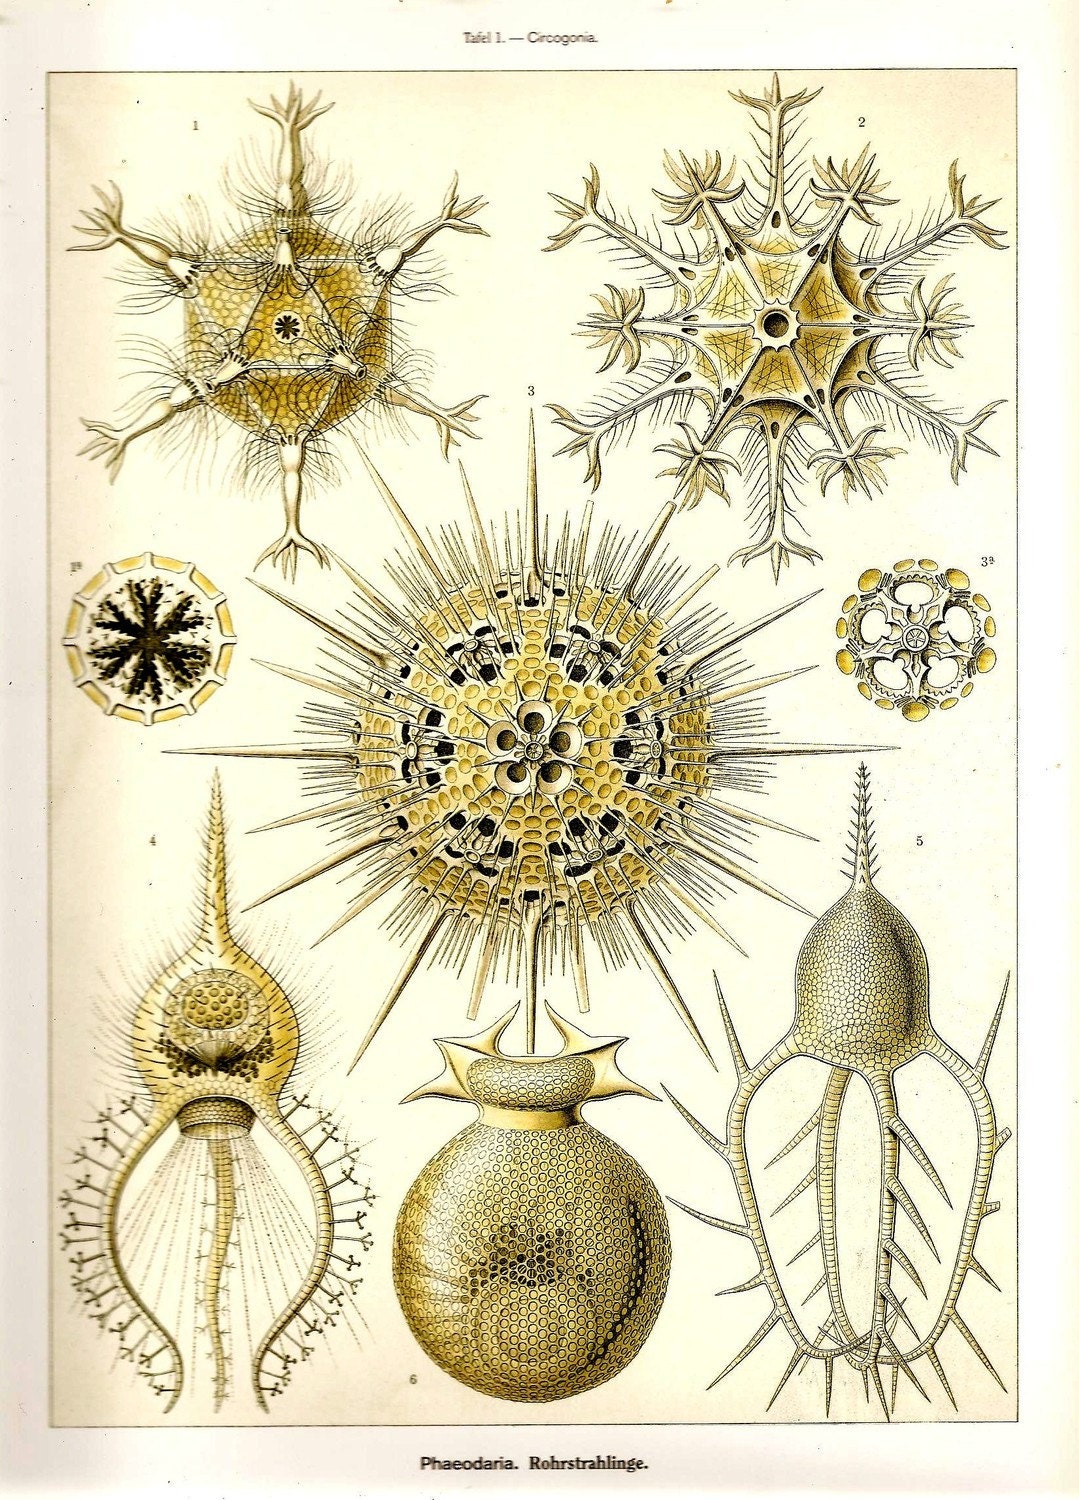 Ernst Haeckel Art Print Beautiful Book PLATE 1 and 2 - 1079 x 1500 jpeg 556kB